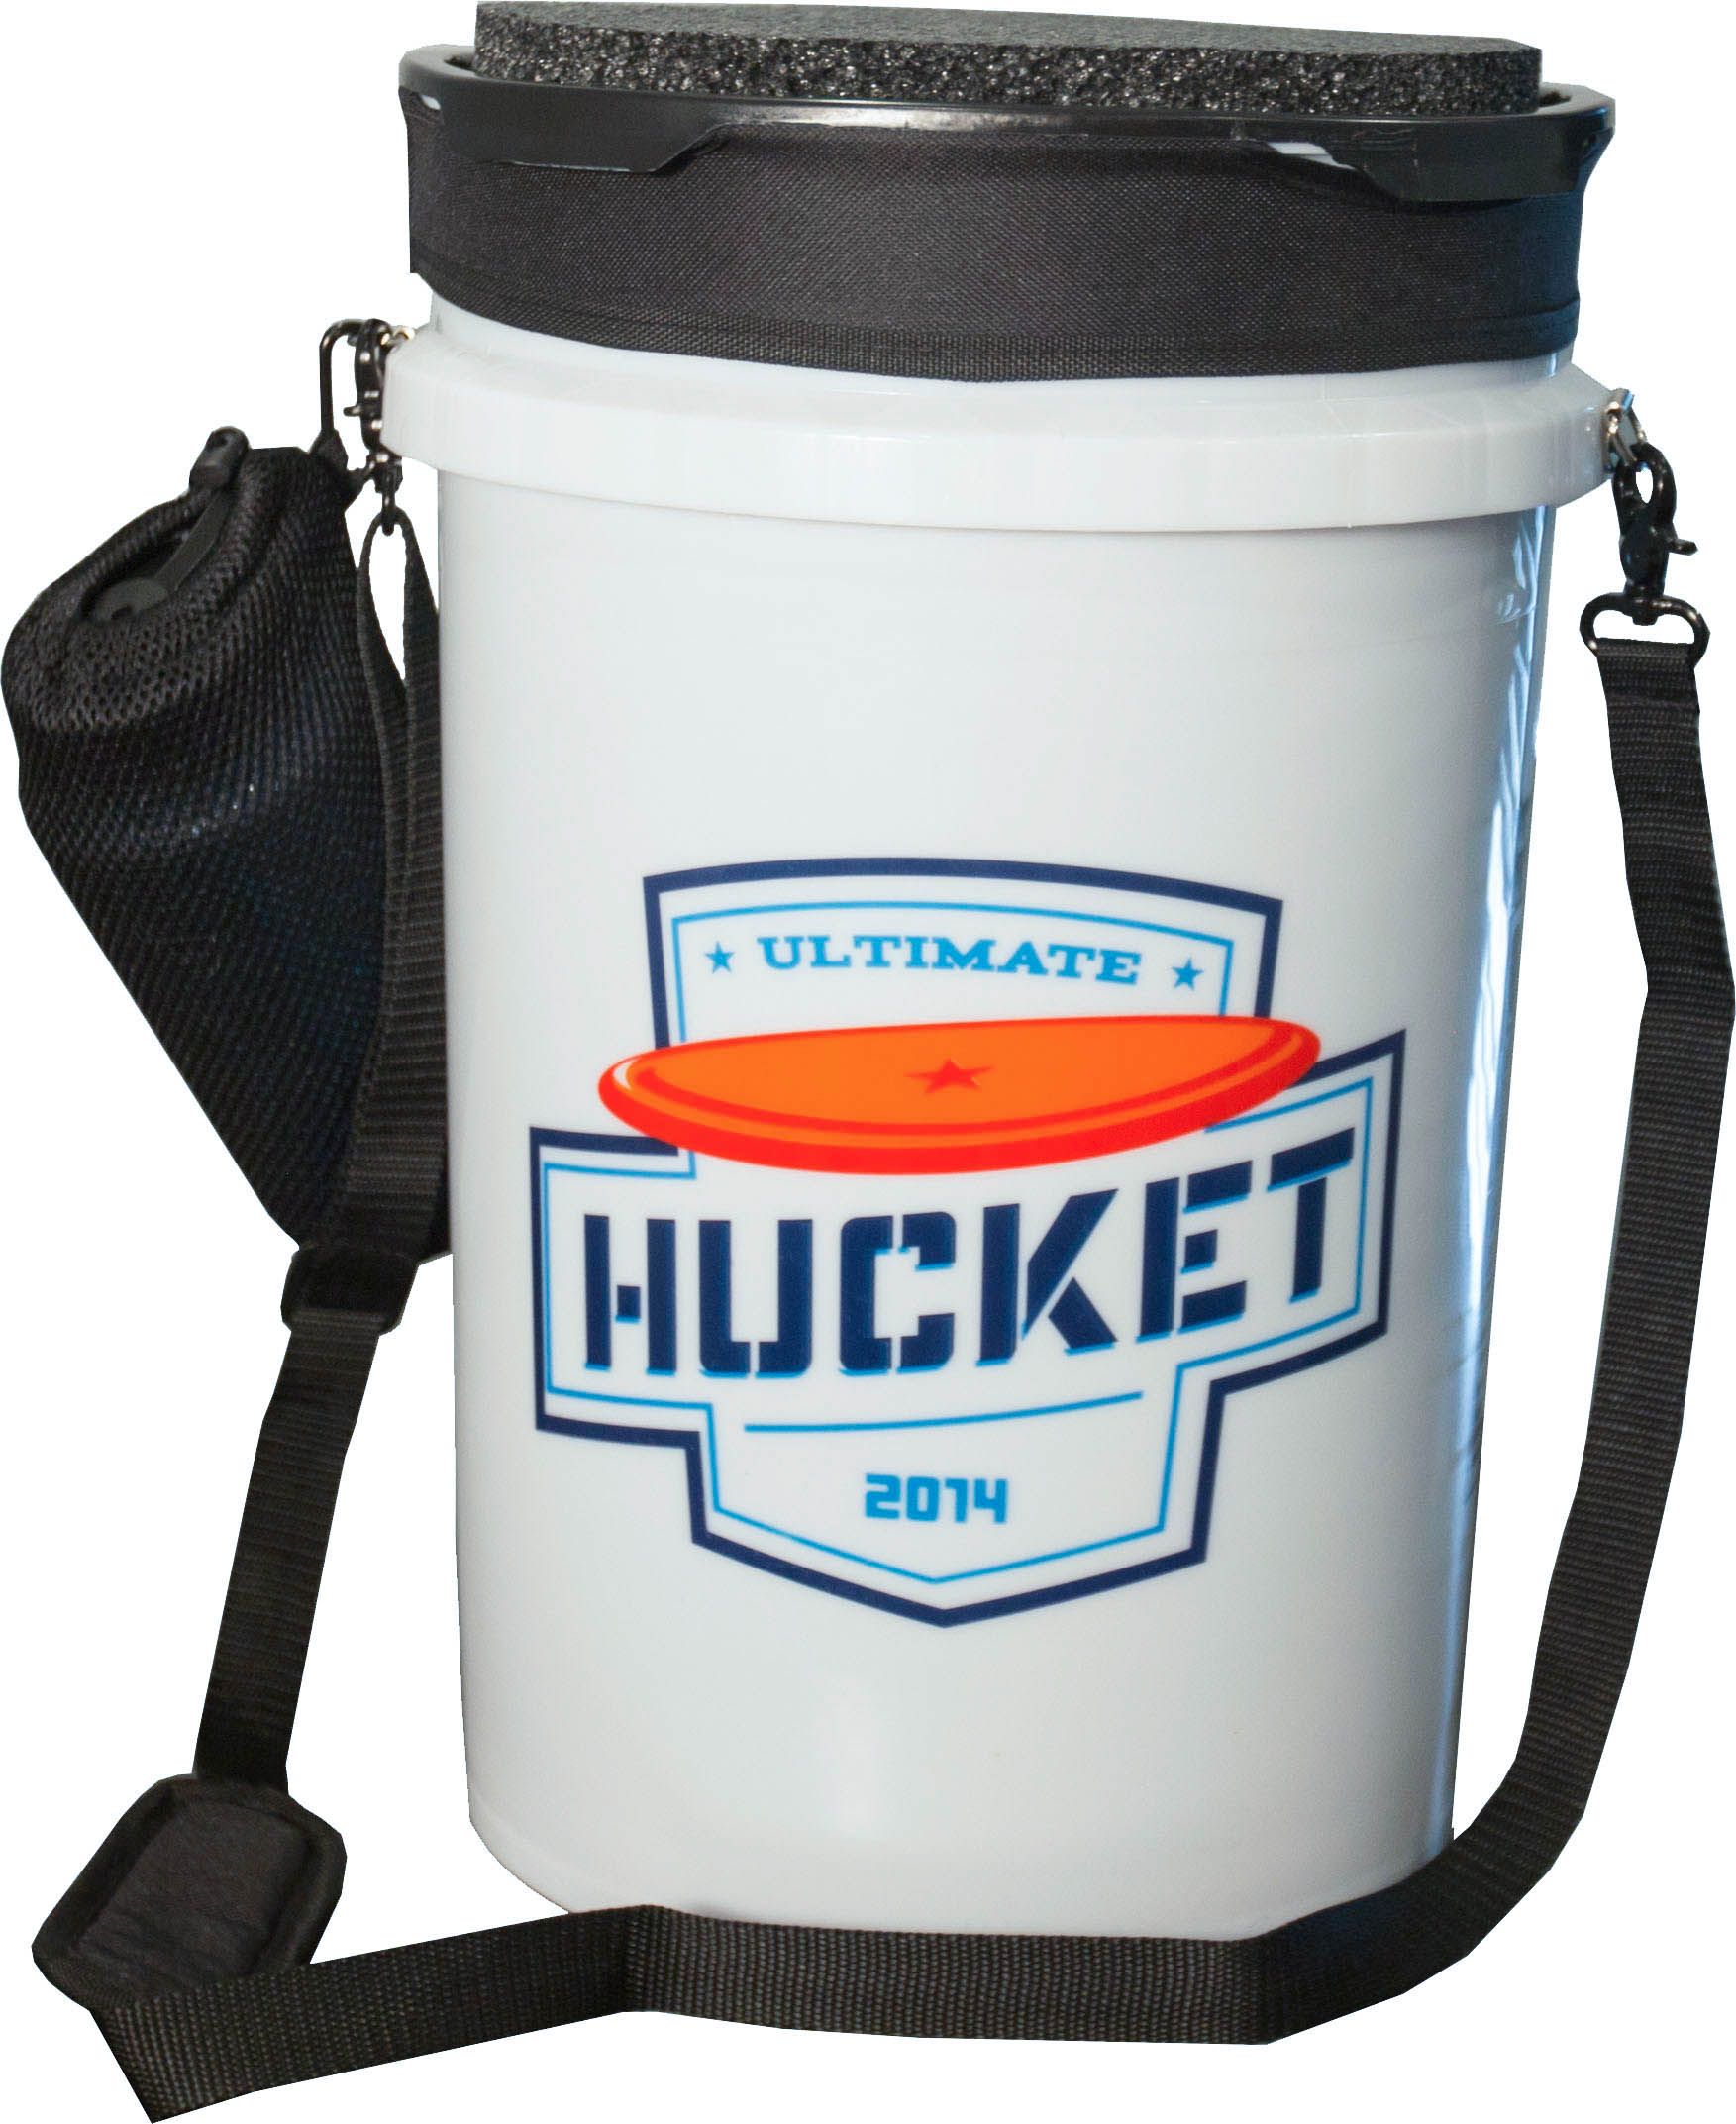 Ultimate Bucket Caddy